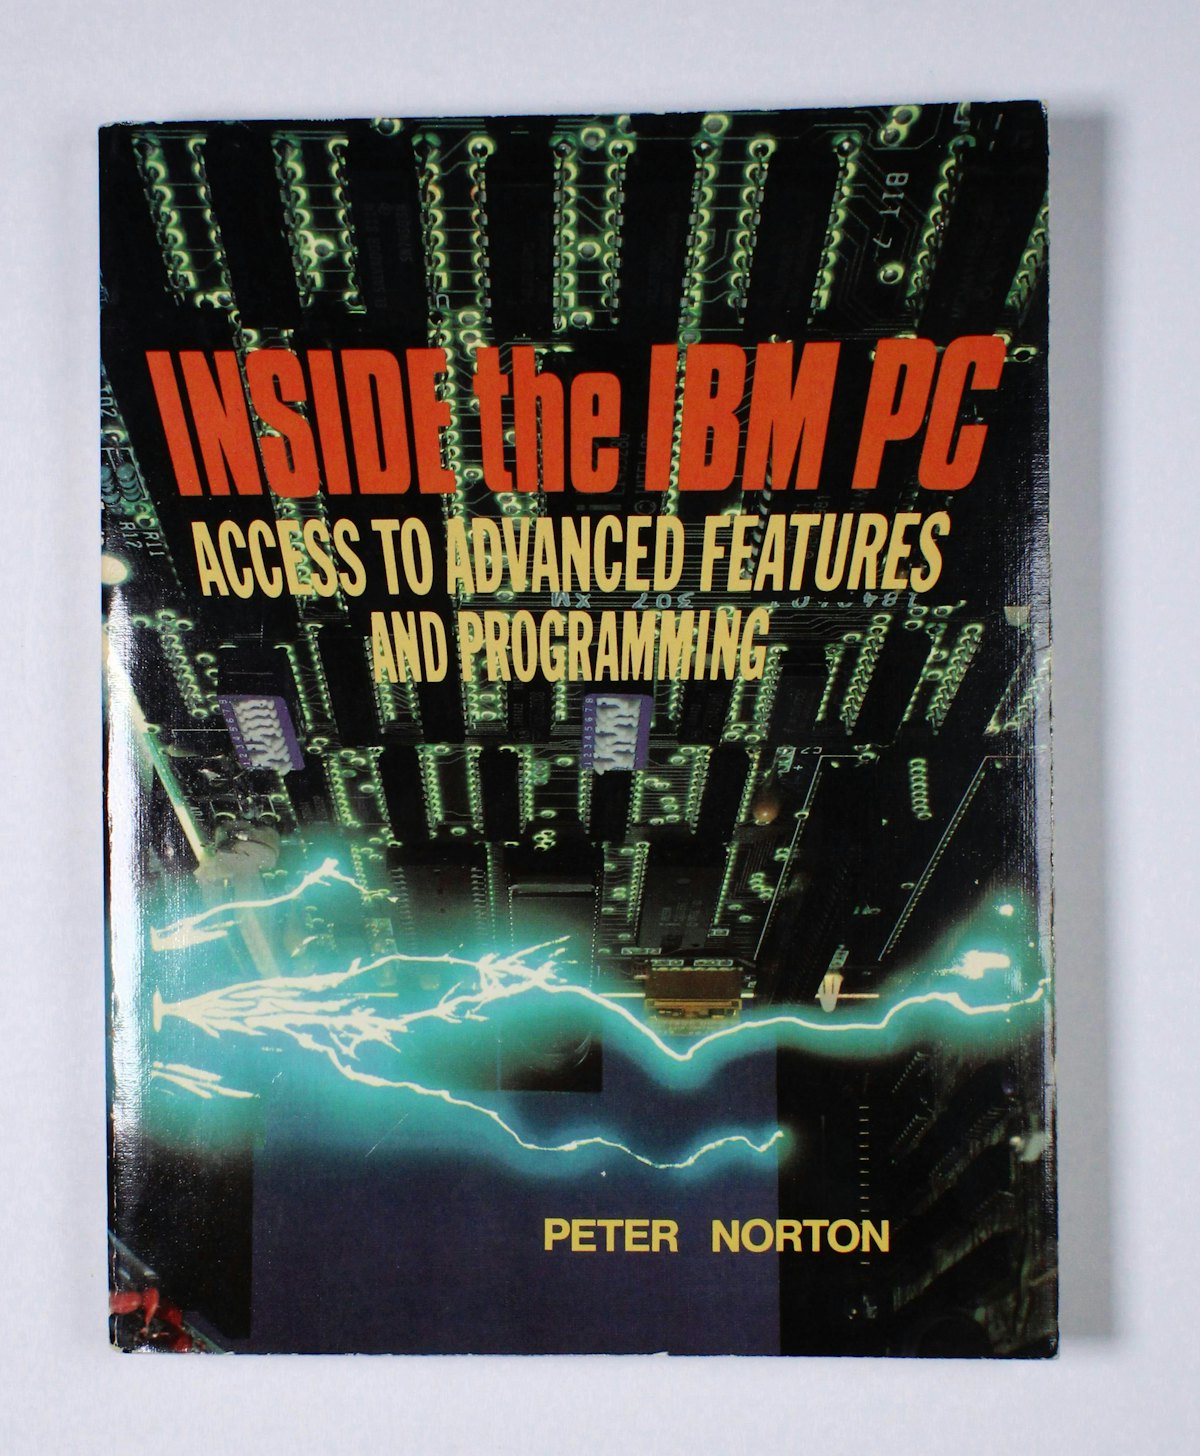 Inside the IBM PC